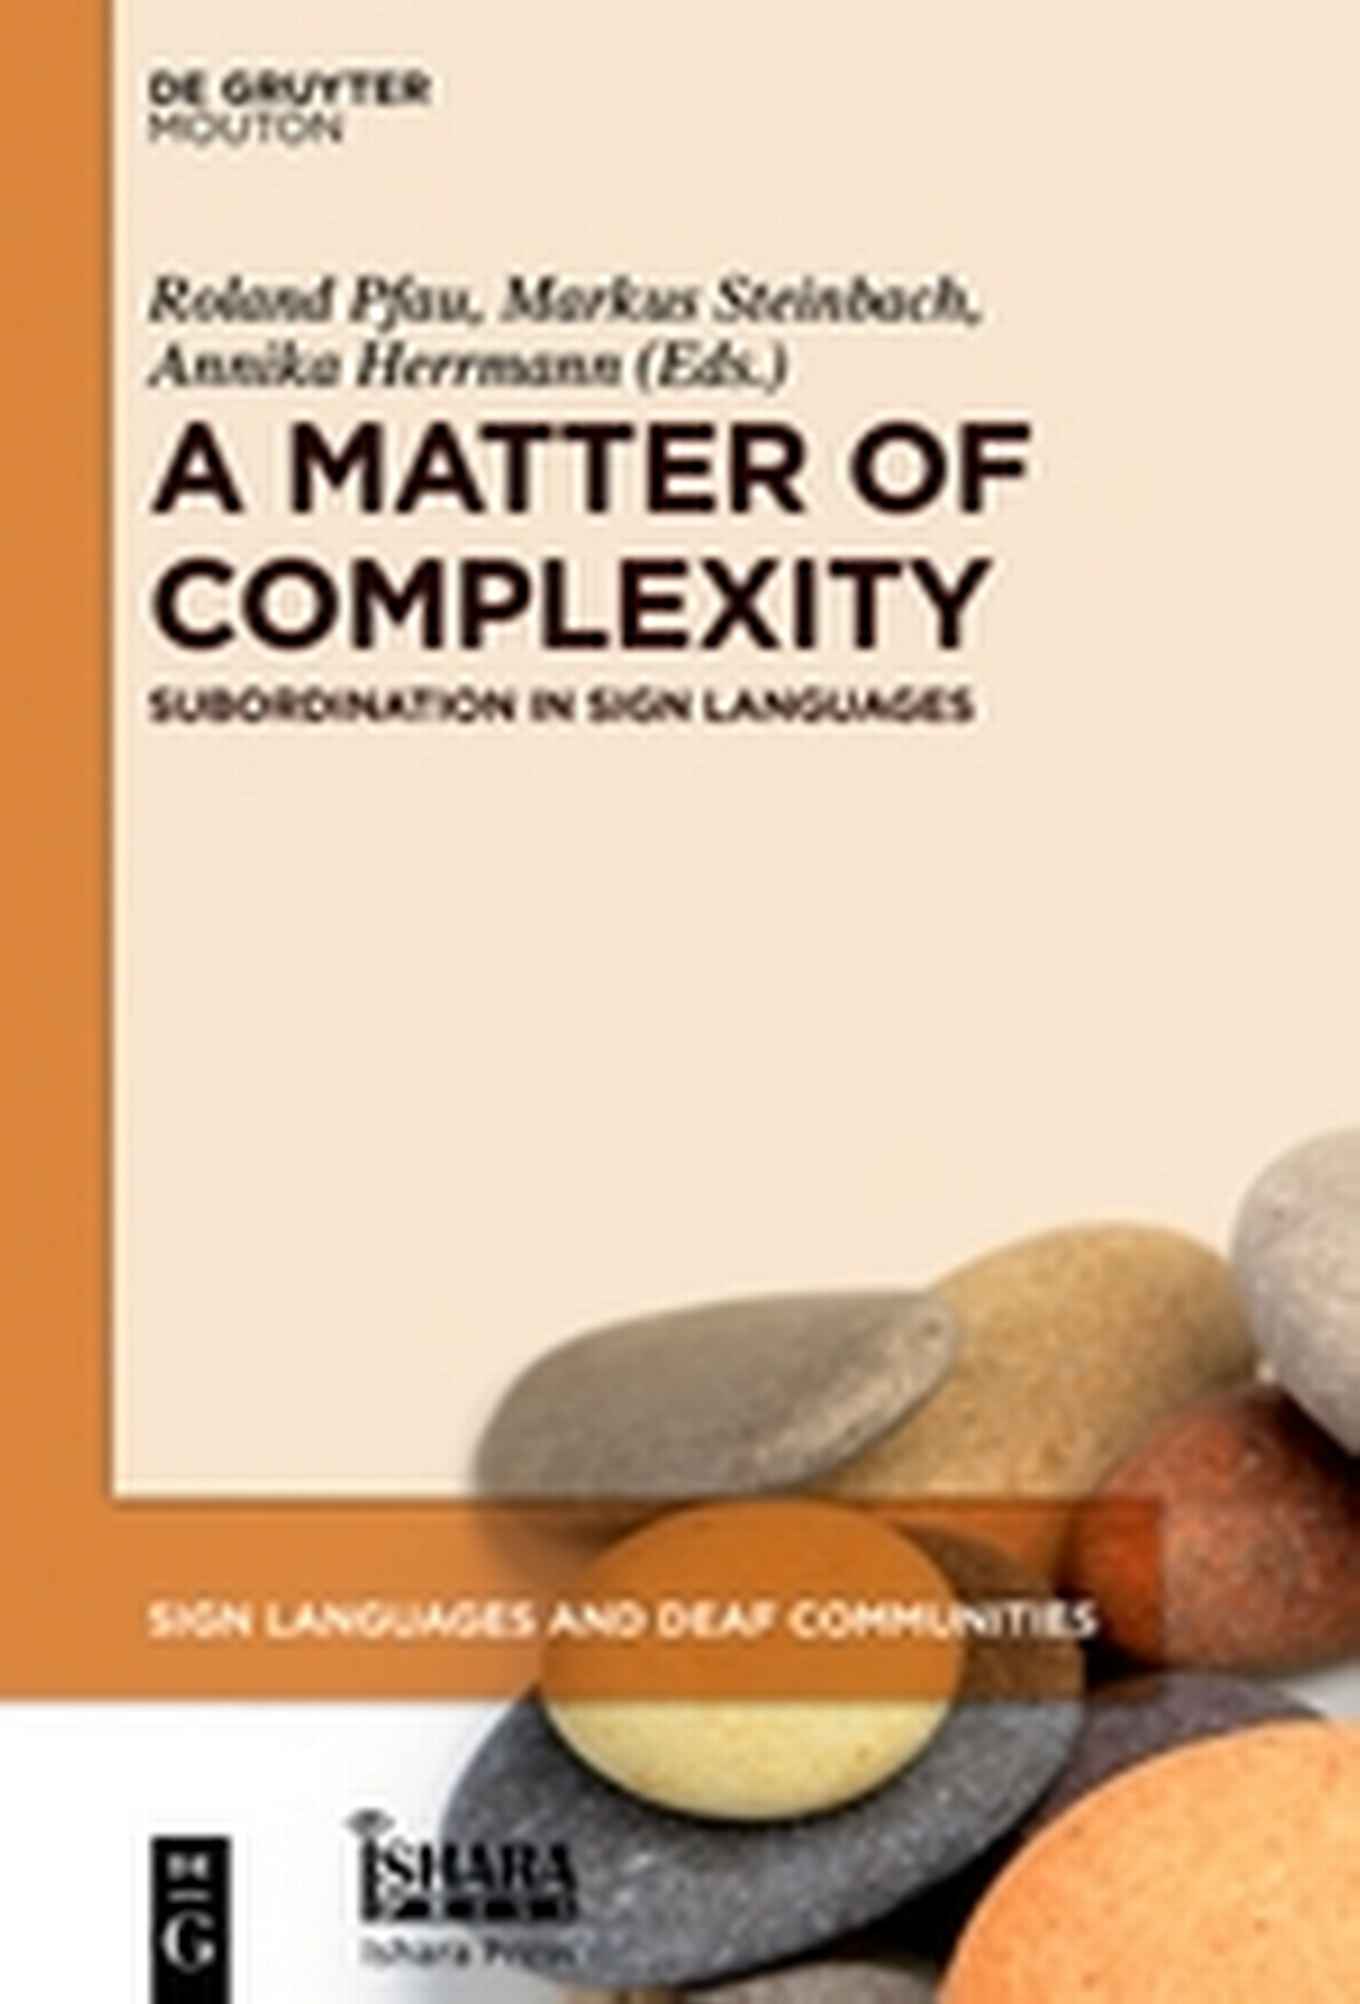 A Matter of Complexity | Roland Pfau e.a.